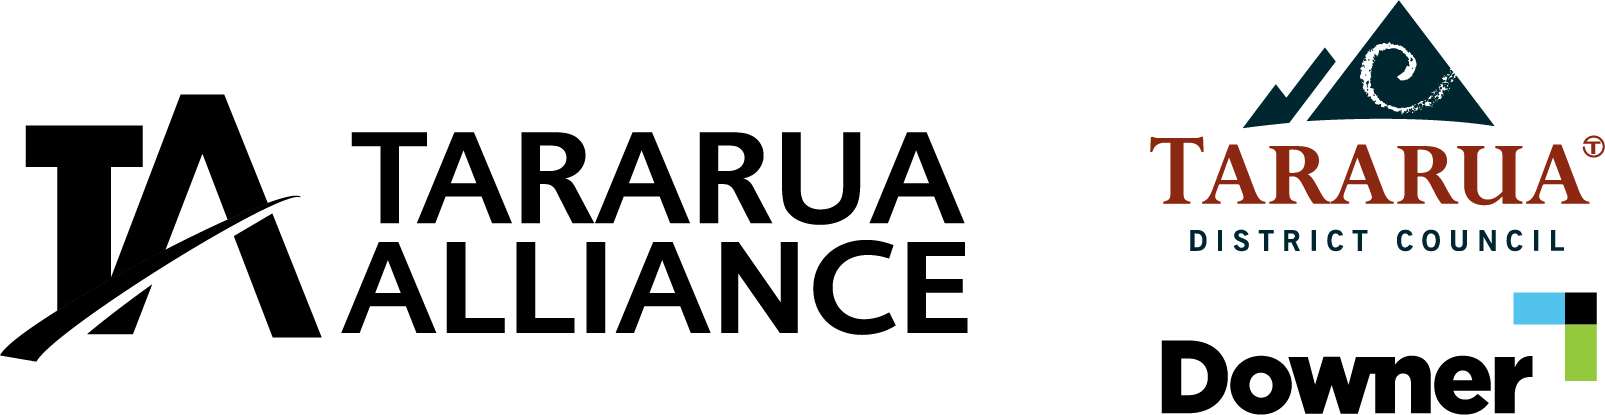 Tararua Alliance logo